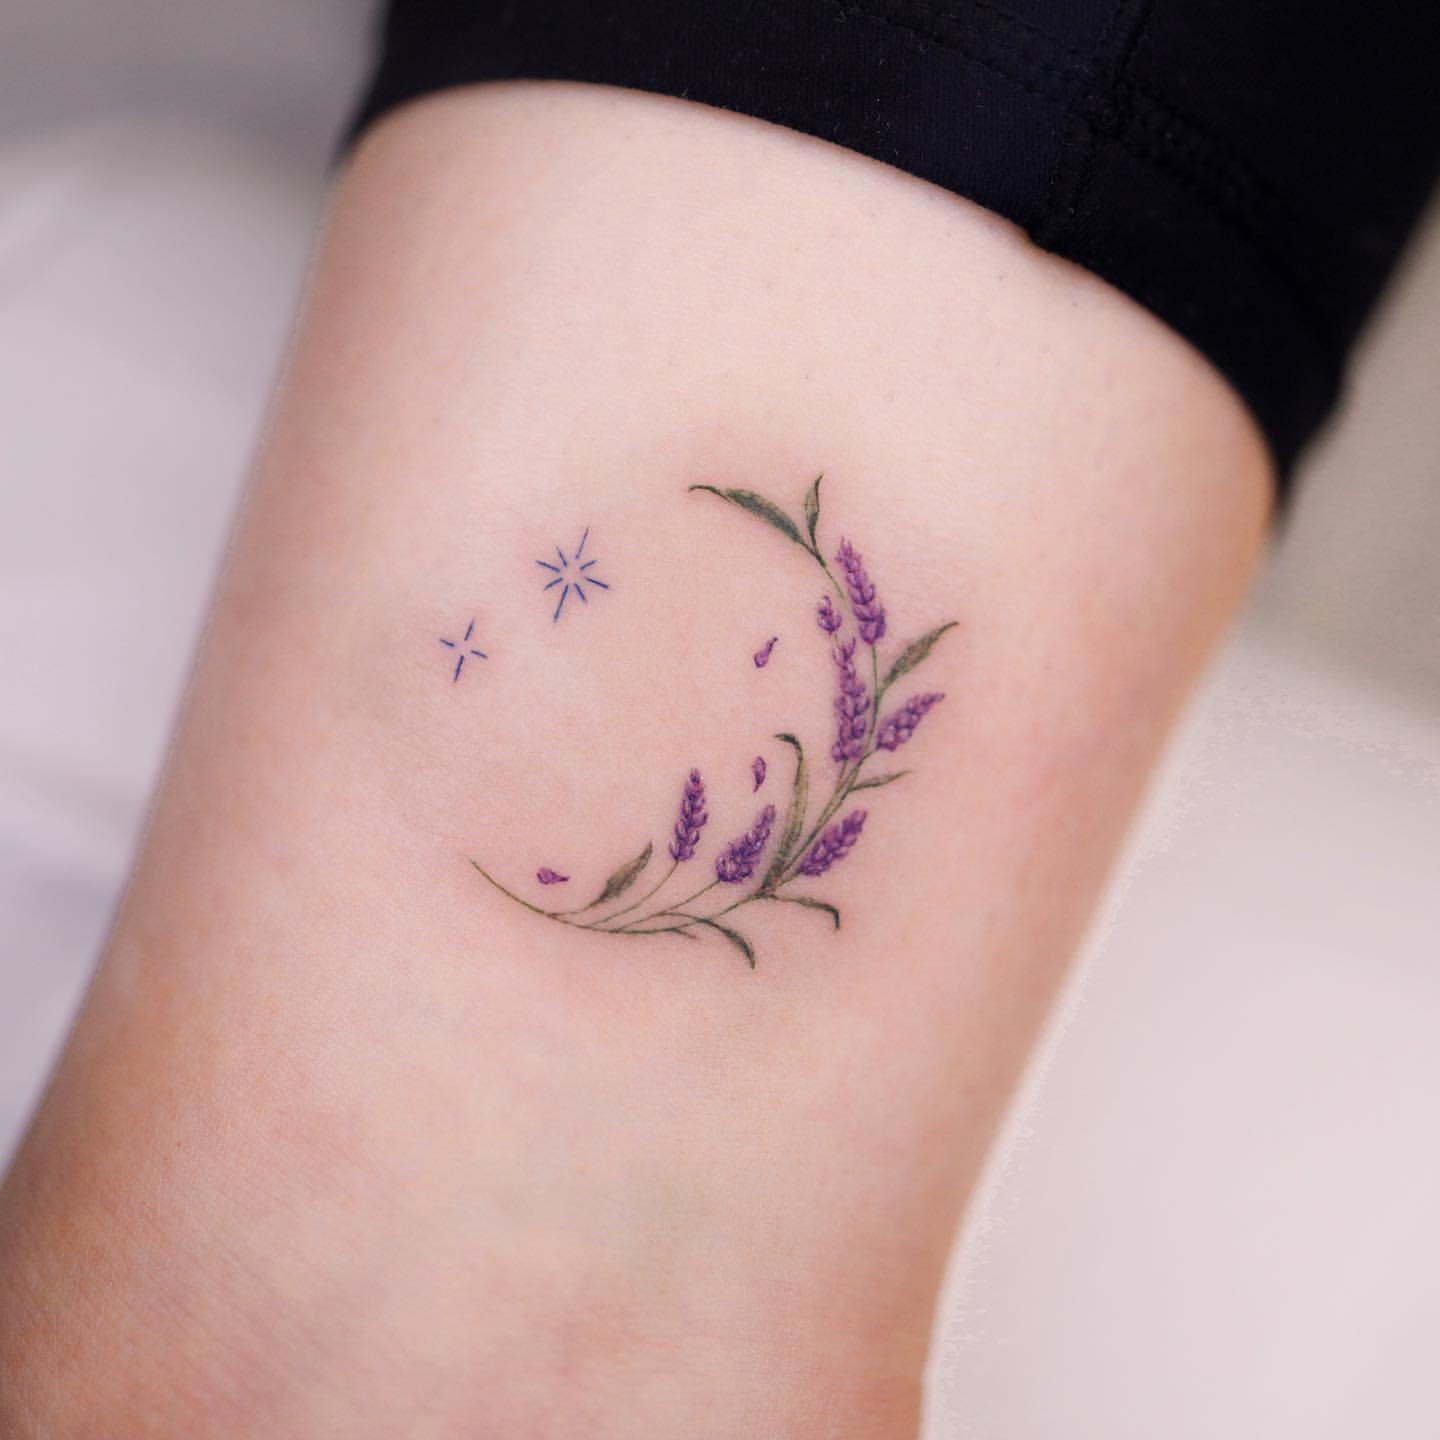 Lavender tattoo ideas